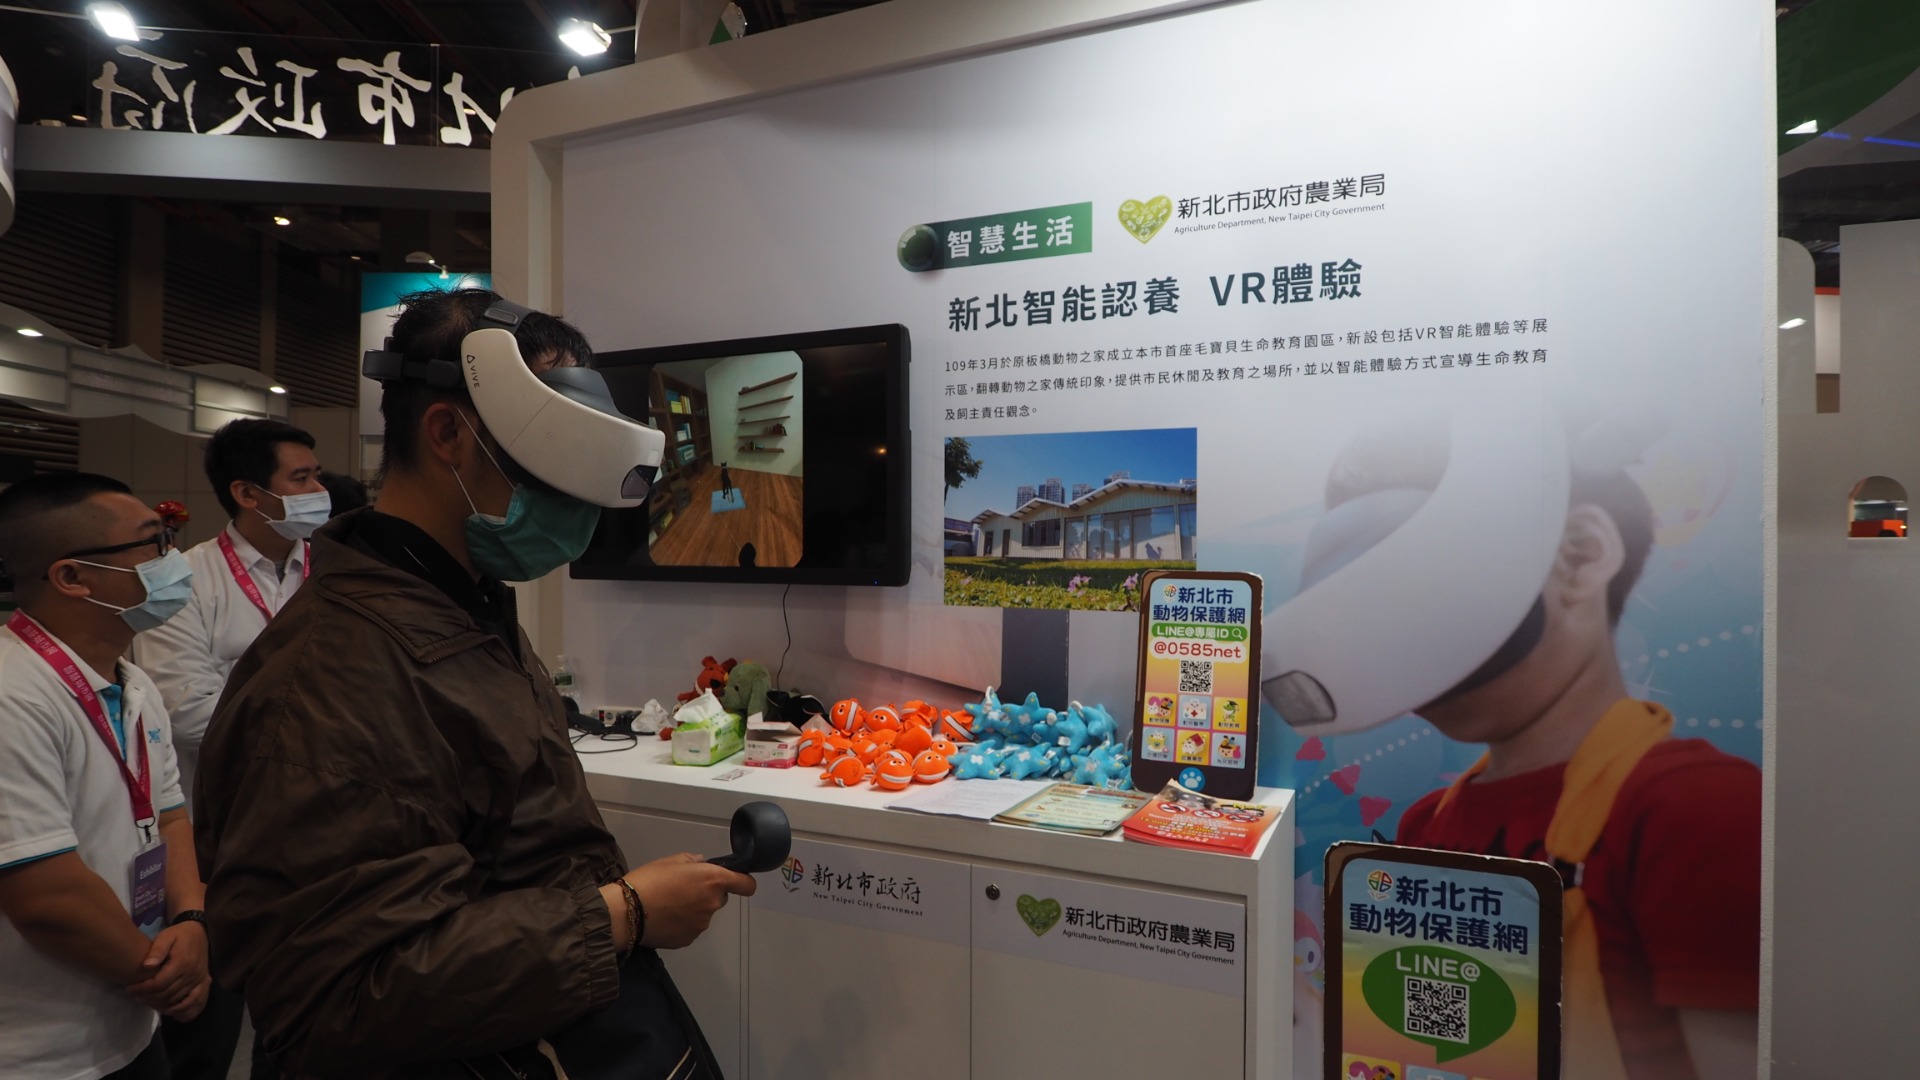 VR虚拟实境应用于实体展览：2021智慧城市展